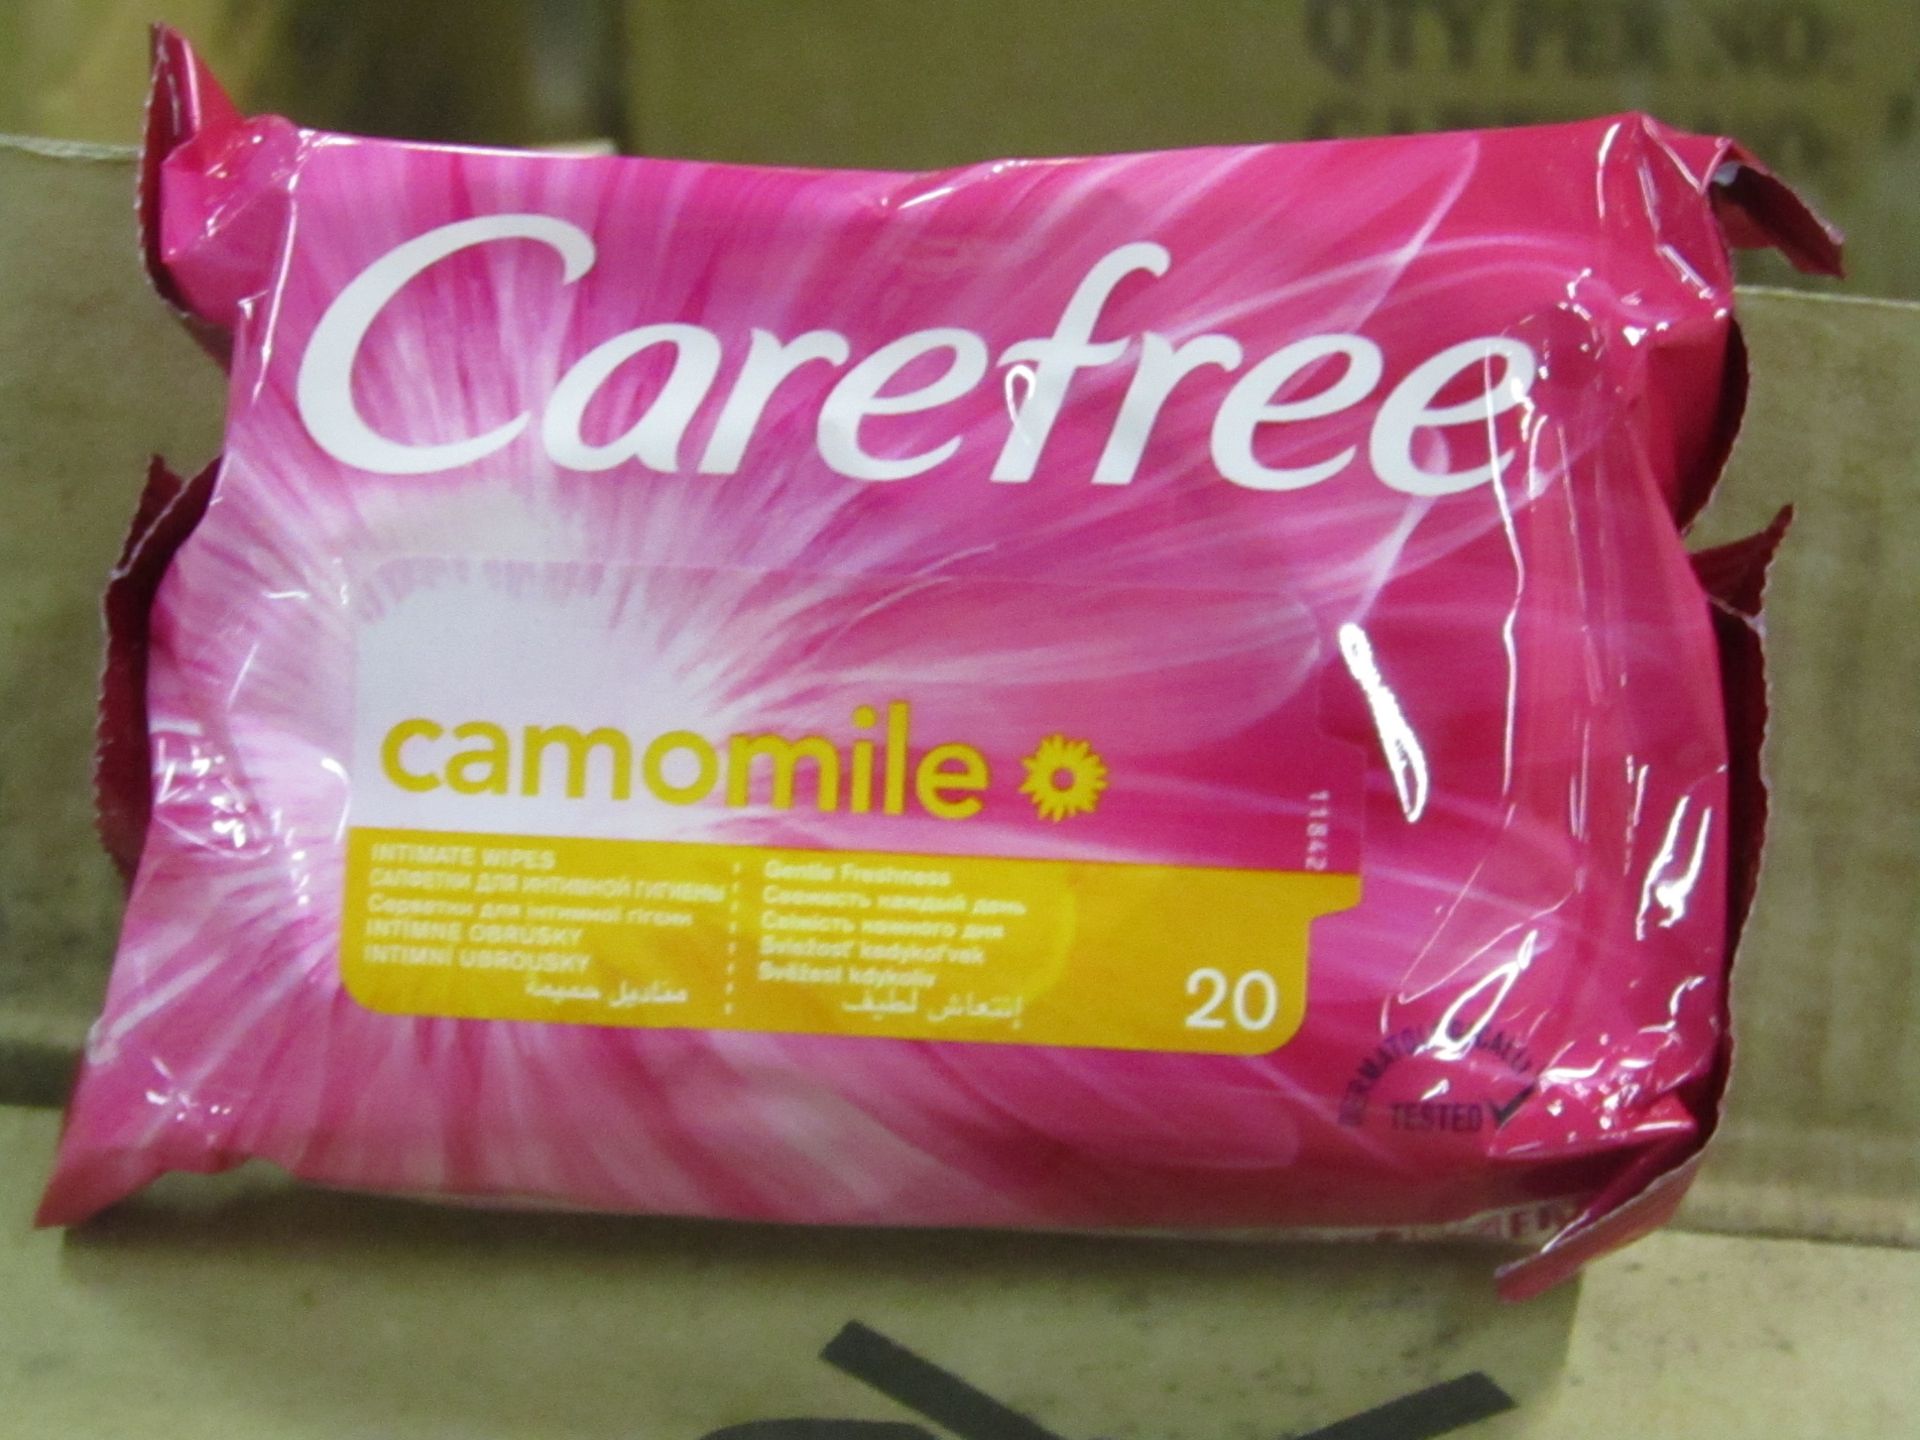 10x packs of 20 Carefree Camonile intimate wipes.